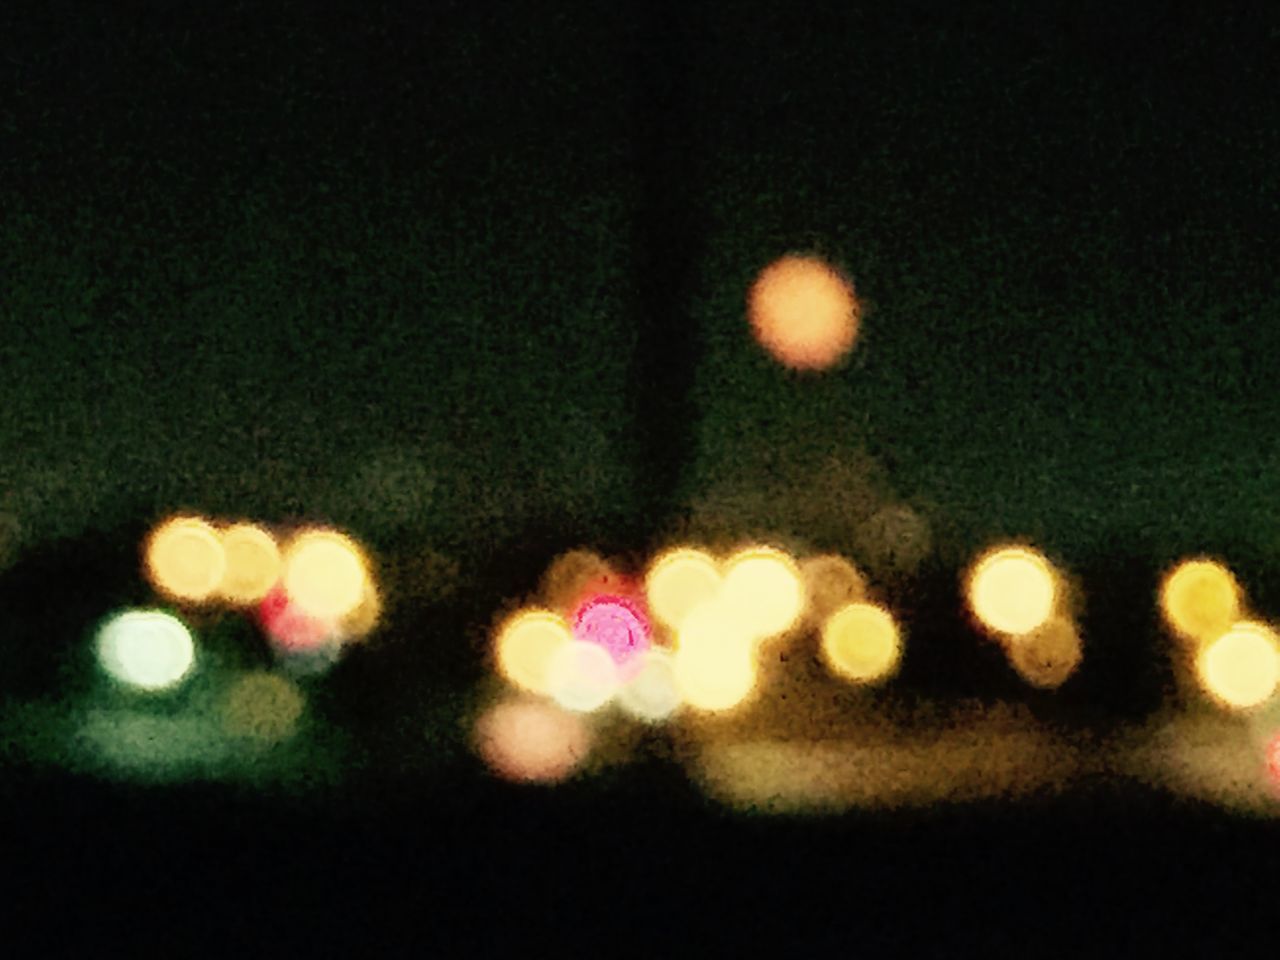 illuminated, night, defocused, light - natural phenomenon, road, street, transportation, lighting equipment, no people, multi colored, glowing, blurred motion, lens flare, dark, outdoors, car, light, blurred, city, copy space